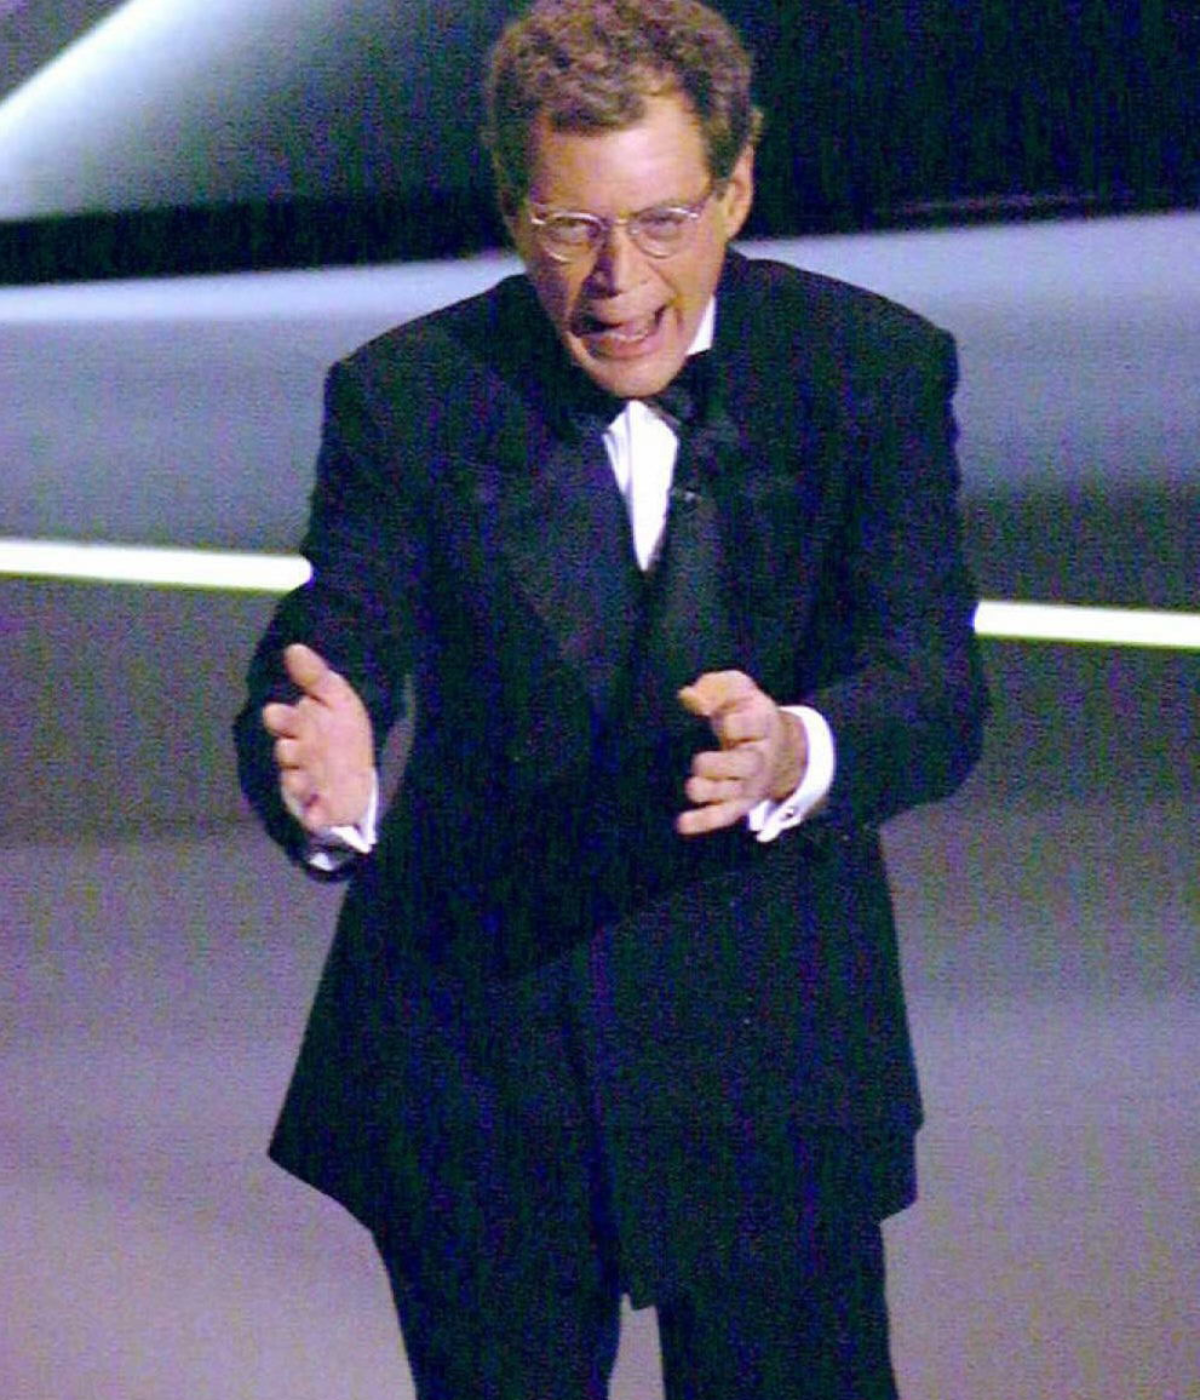 David Letterman hosting the 1995 Oscars 